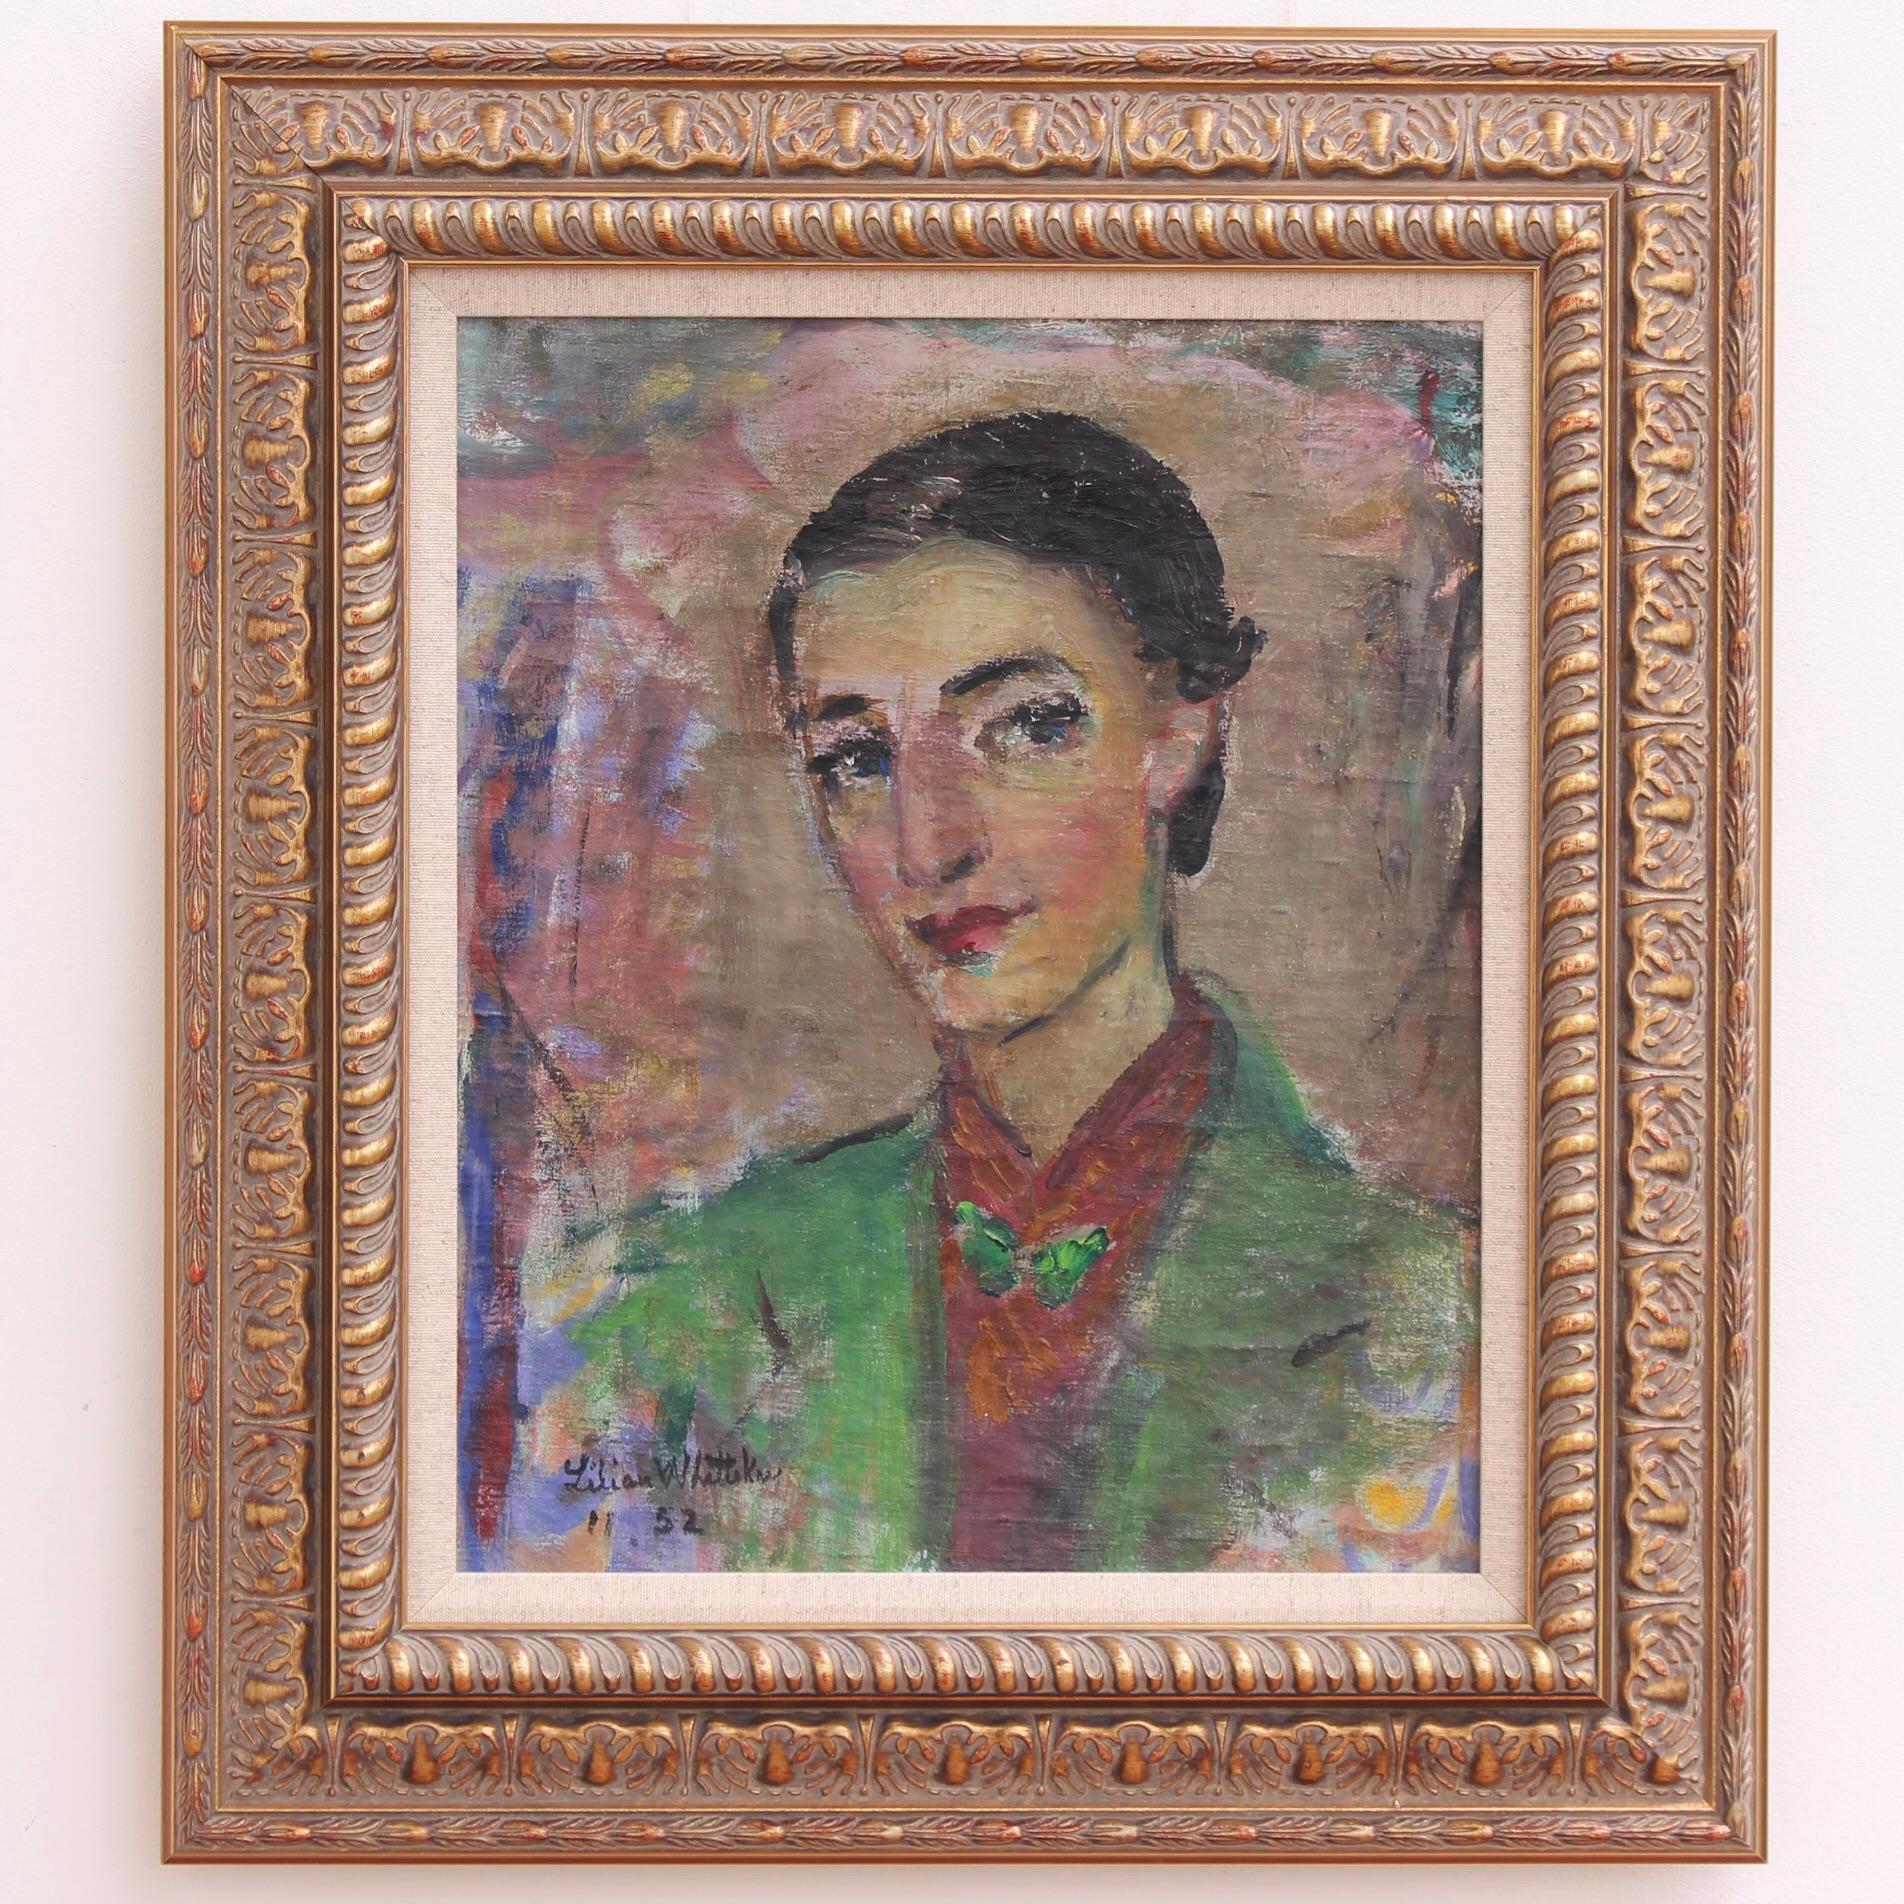 Lilian E. Whitteker Portrait Painting - Self-Portrait of the Artist